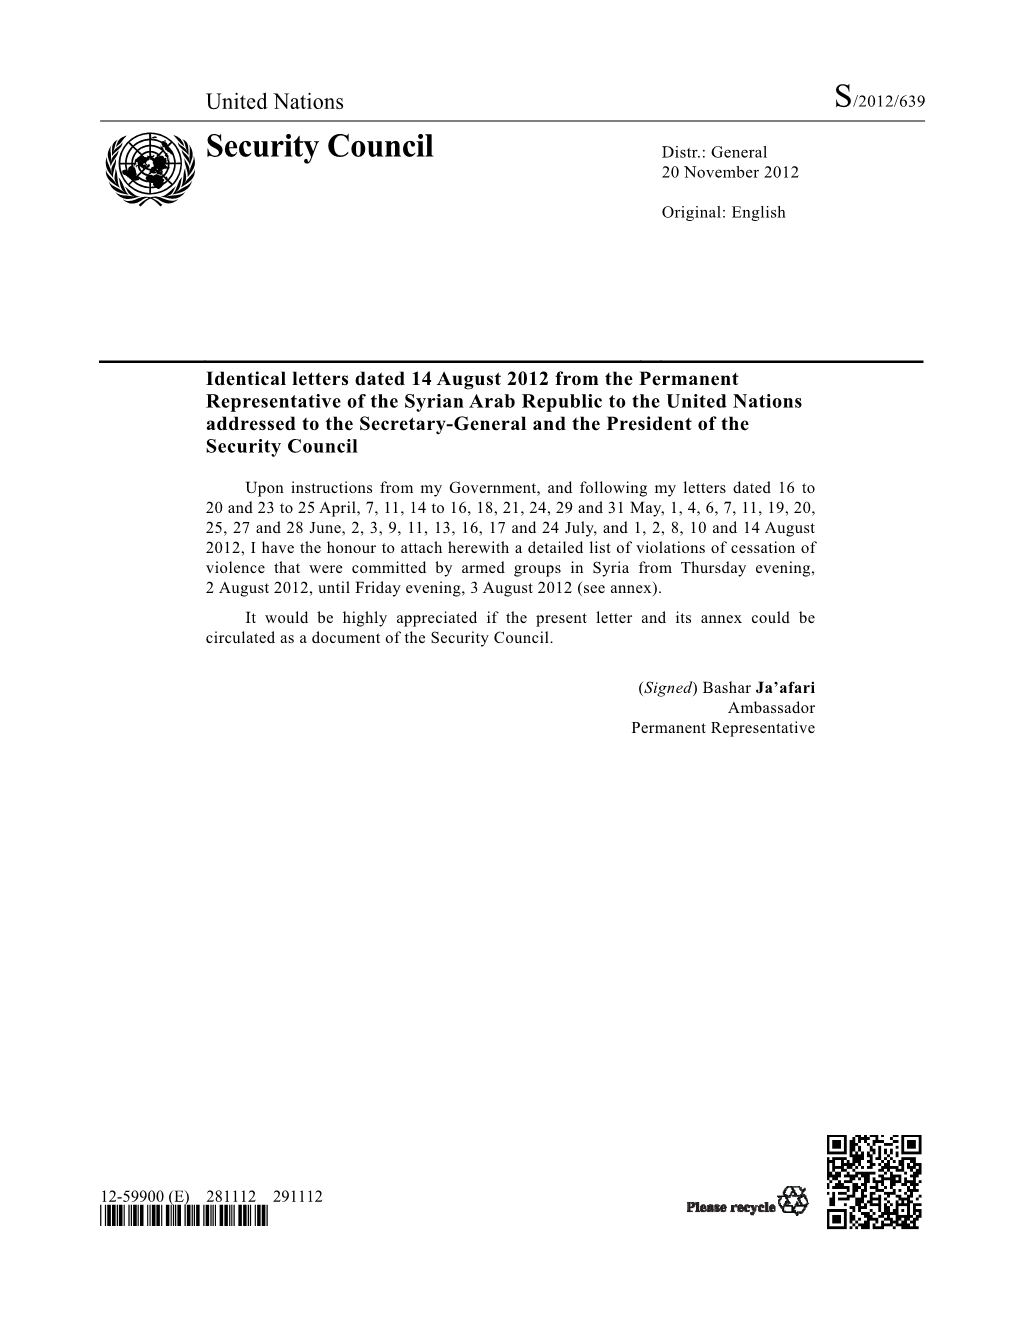 Security Council Distr.: General 20 November 2012